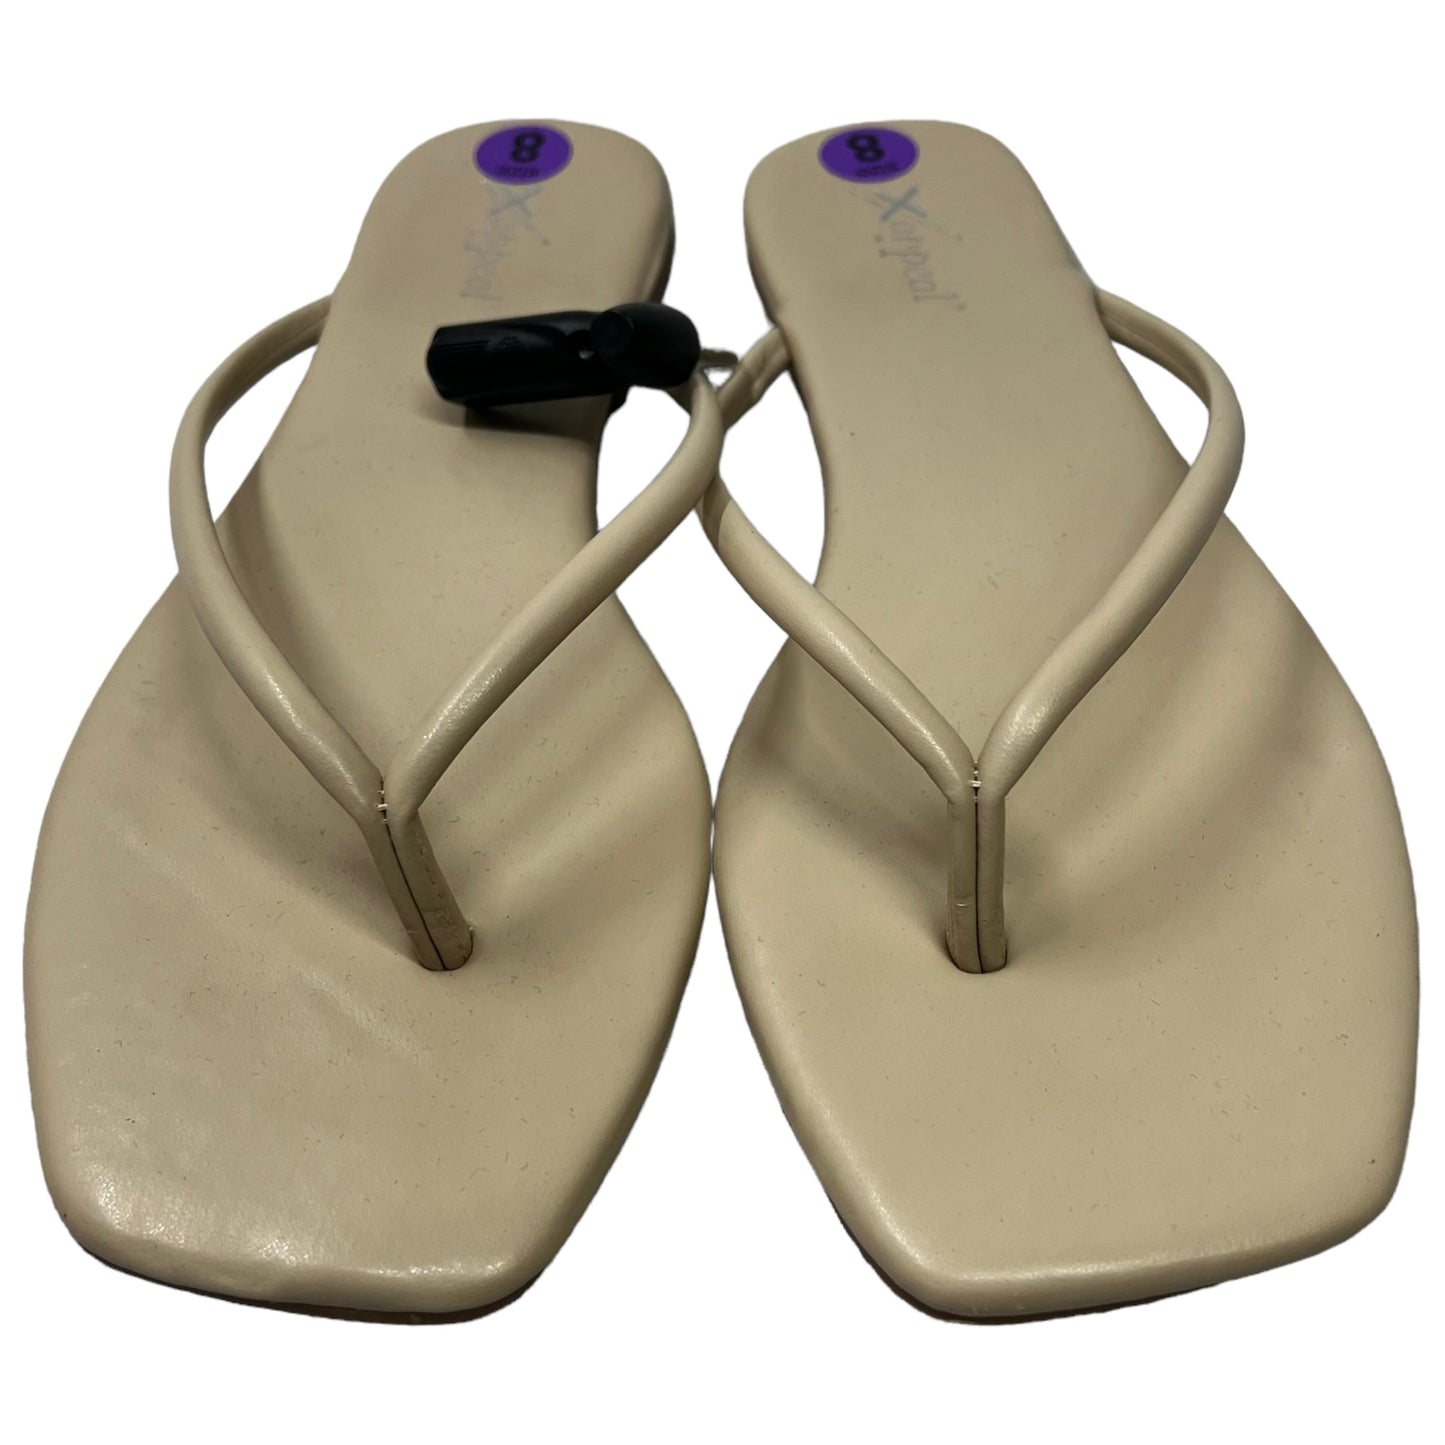 Sandals Flip Flops By Xappeal  Size: 8